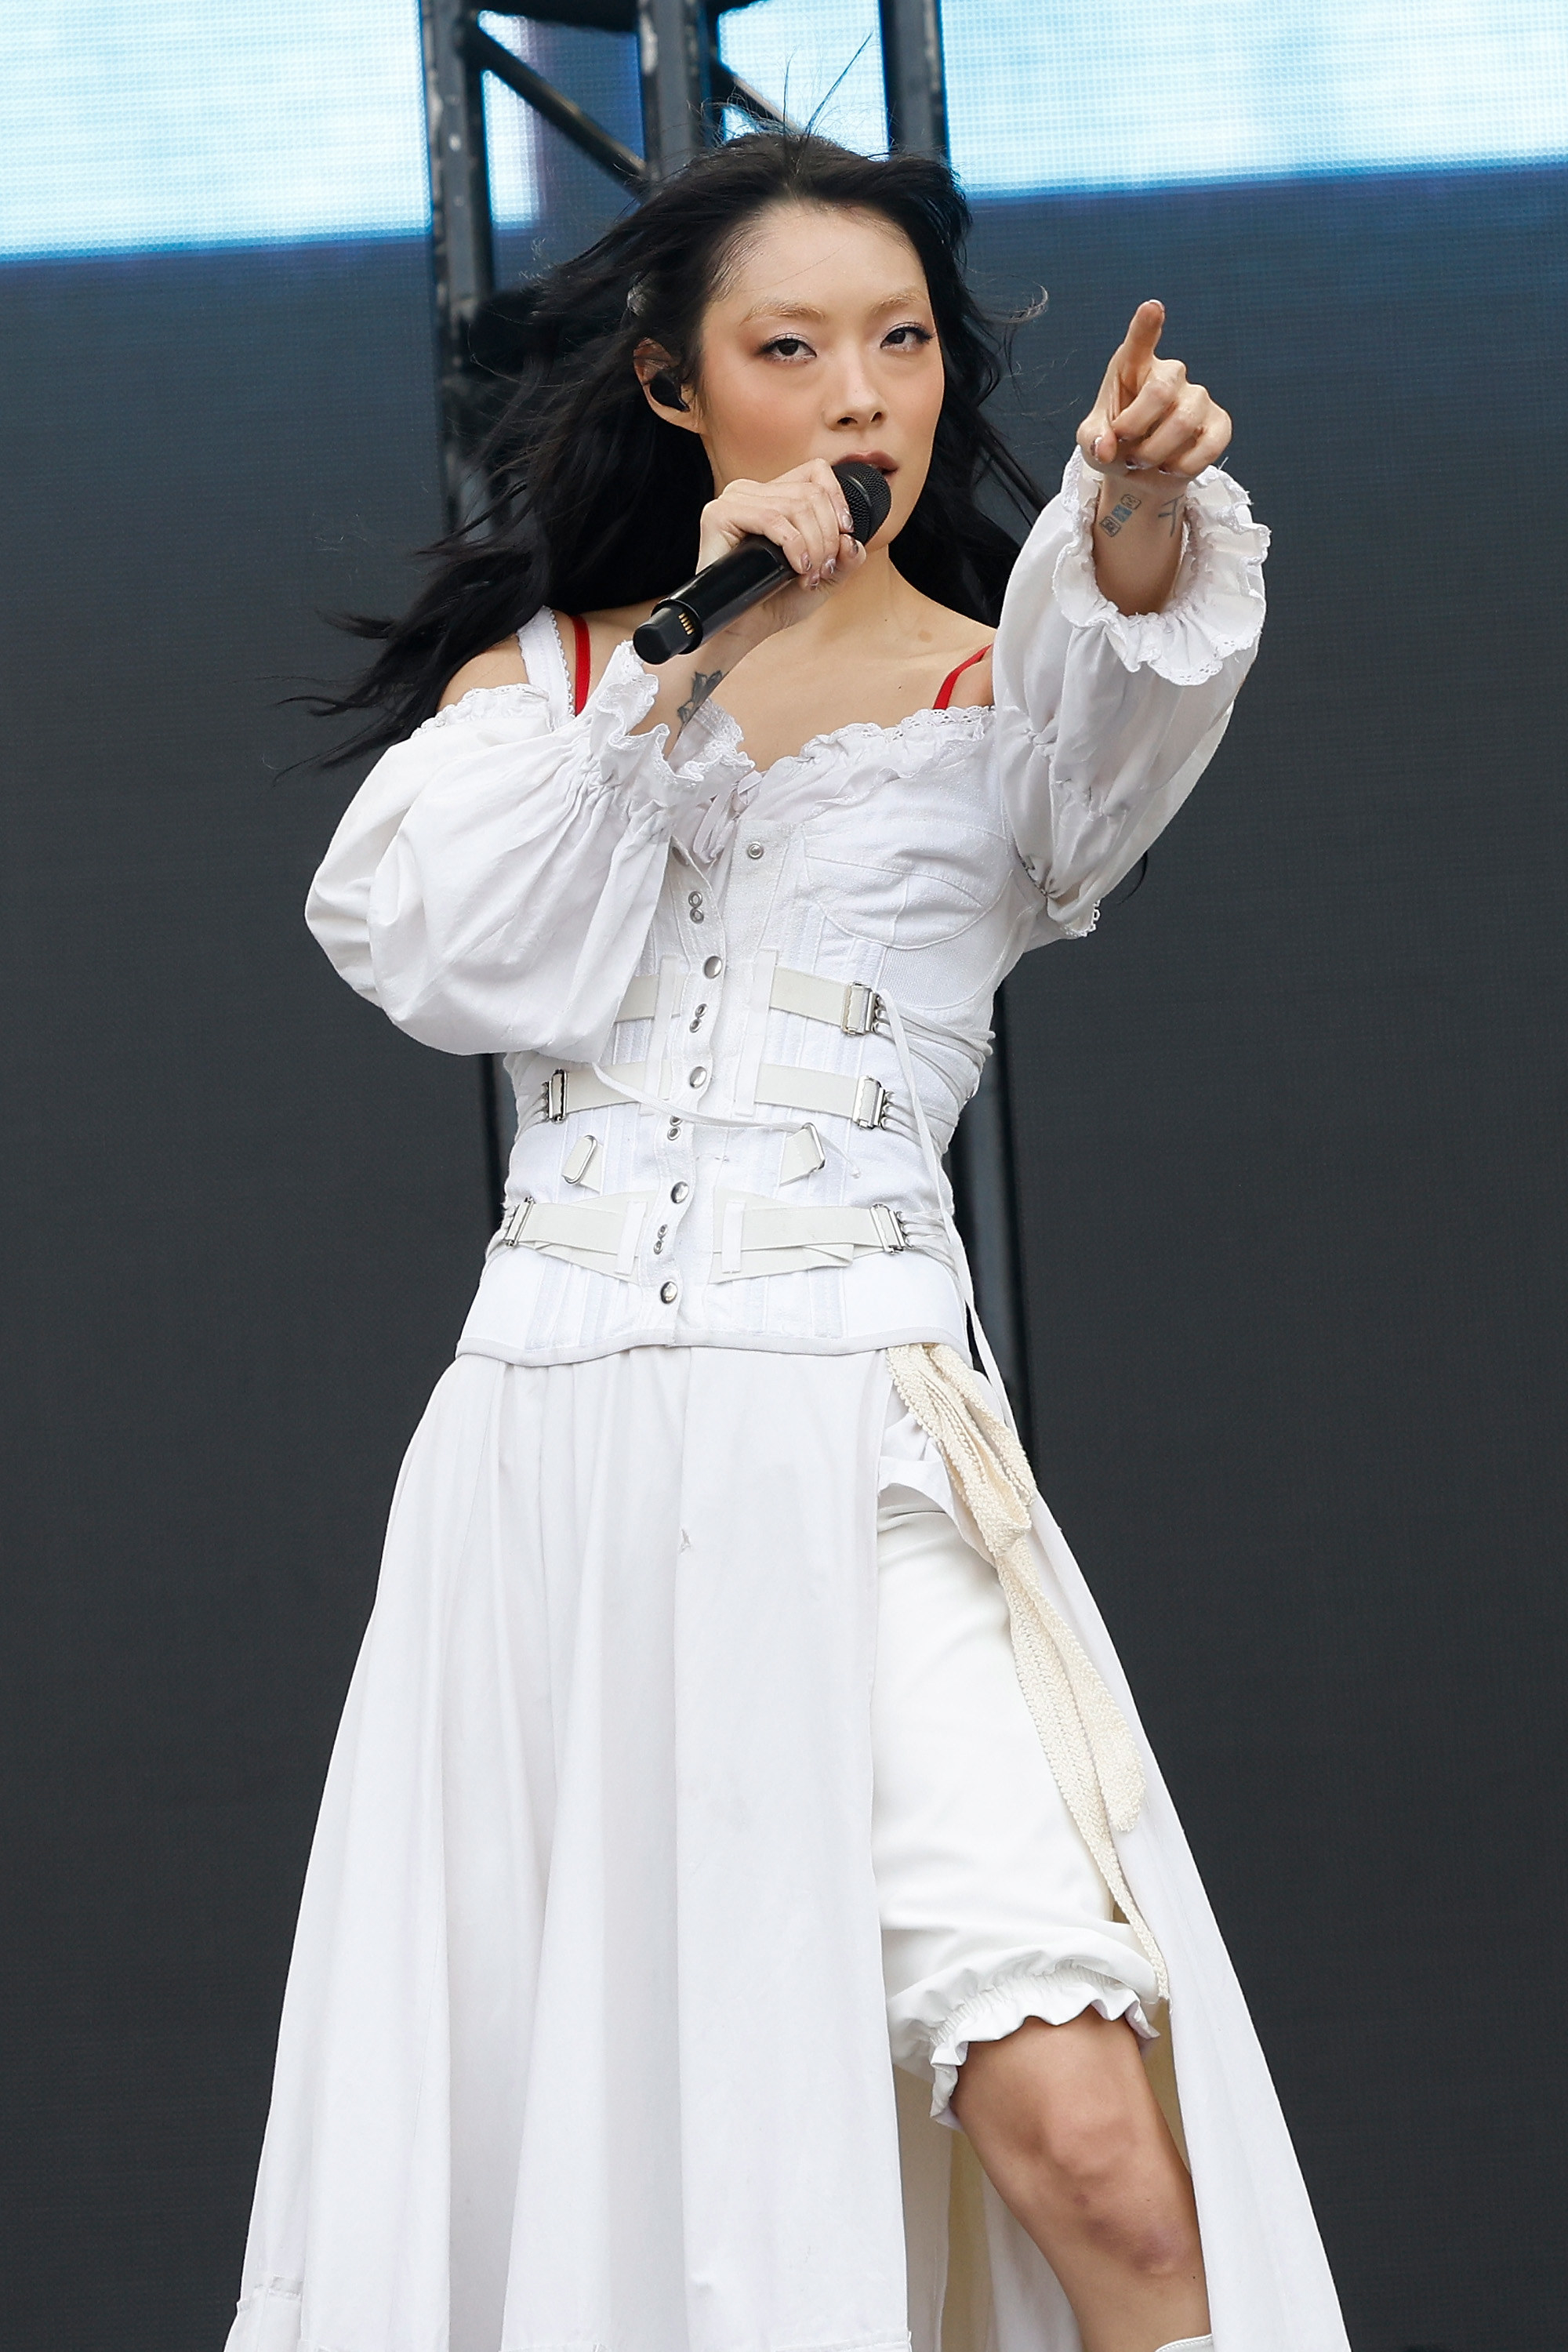 Rina Sawayama onstage